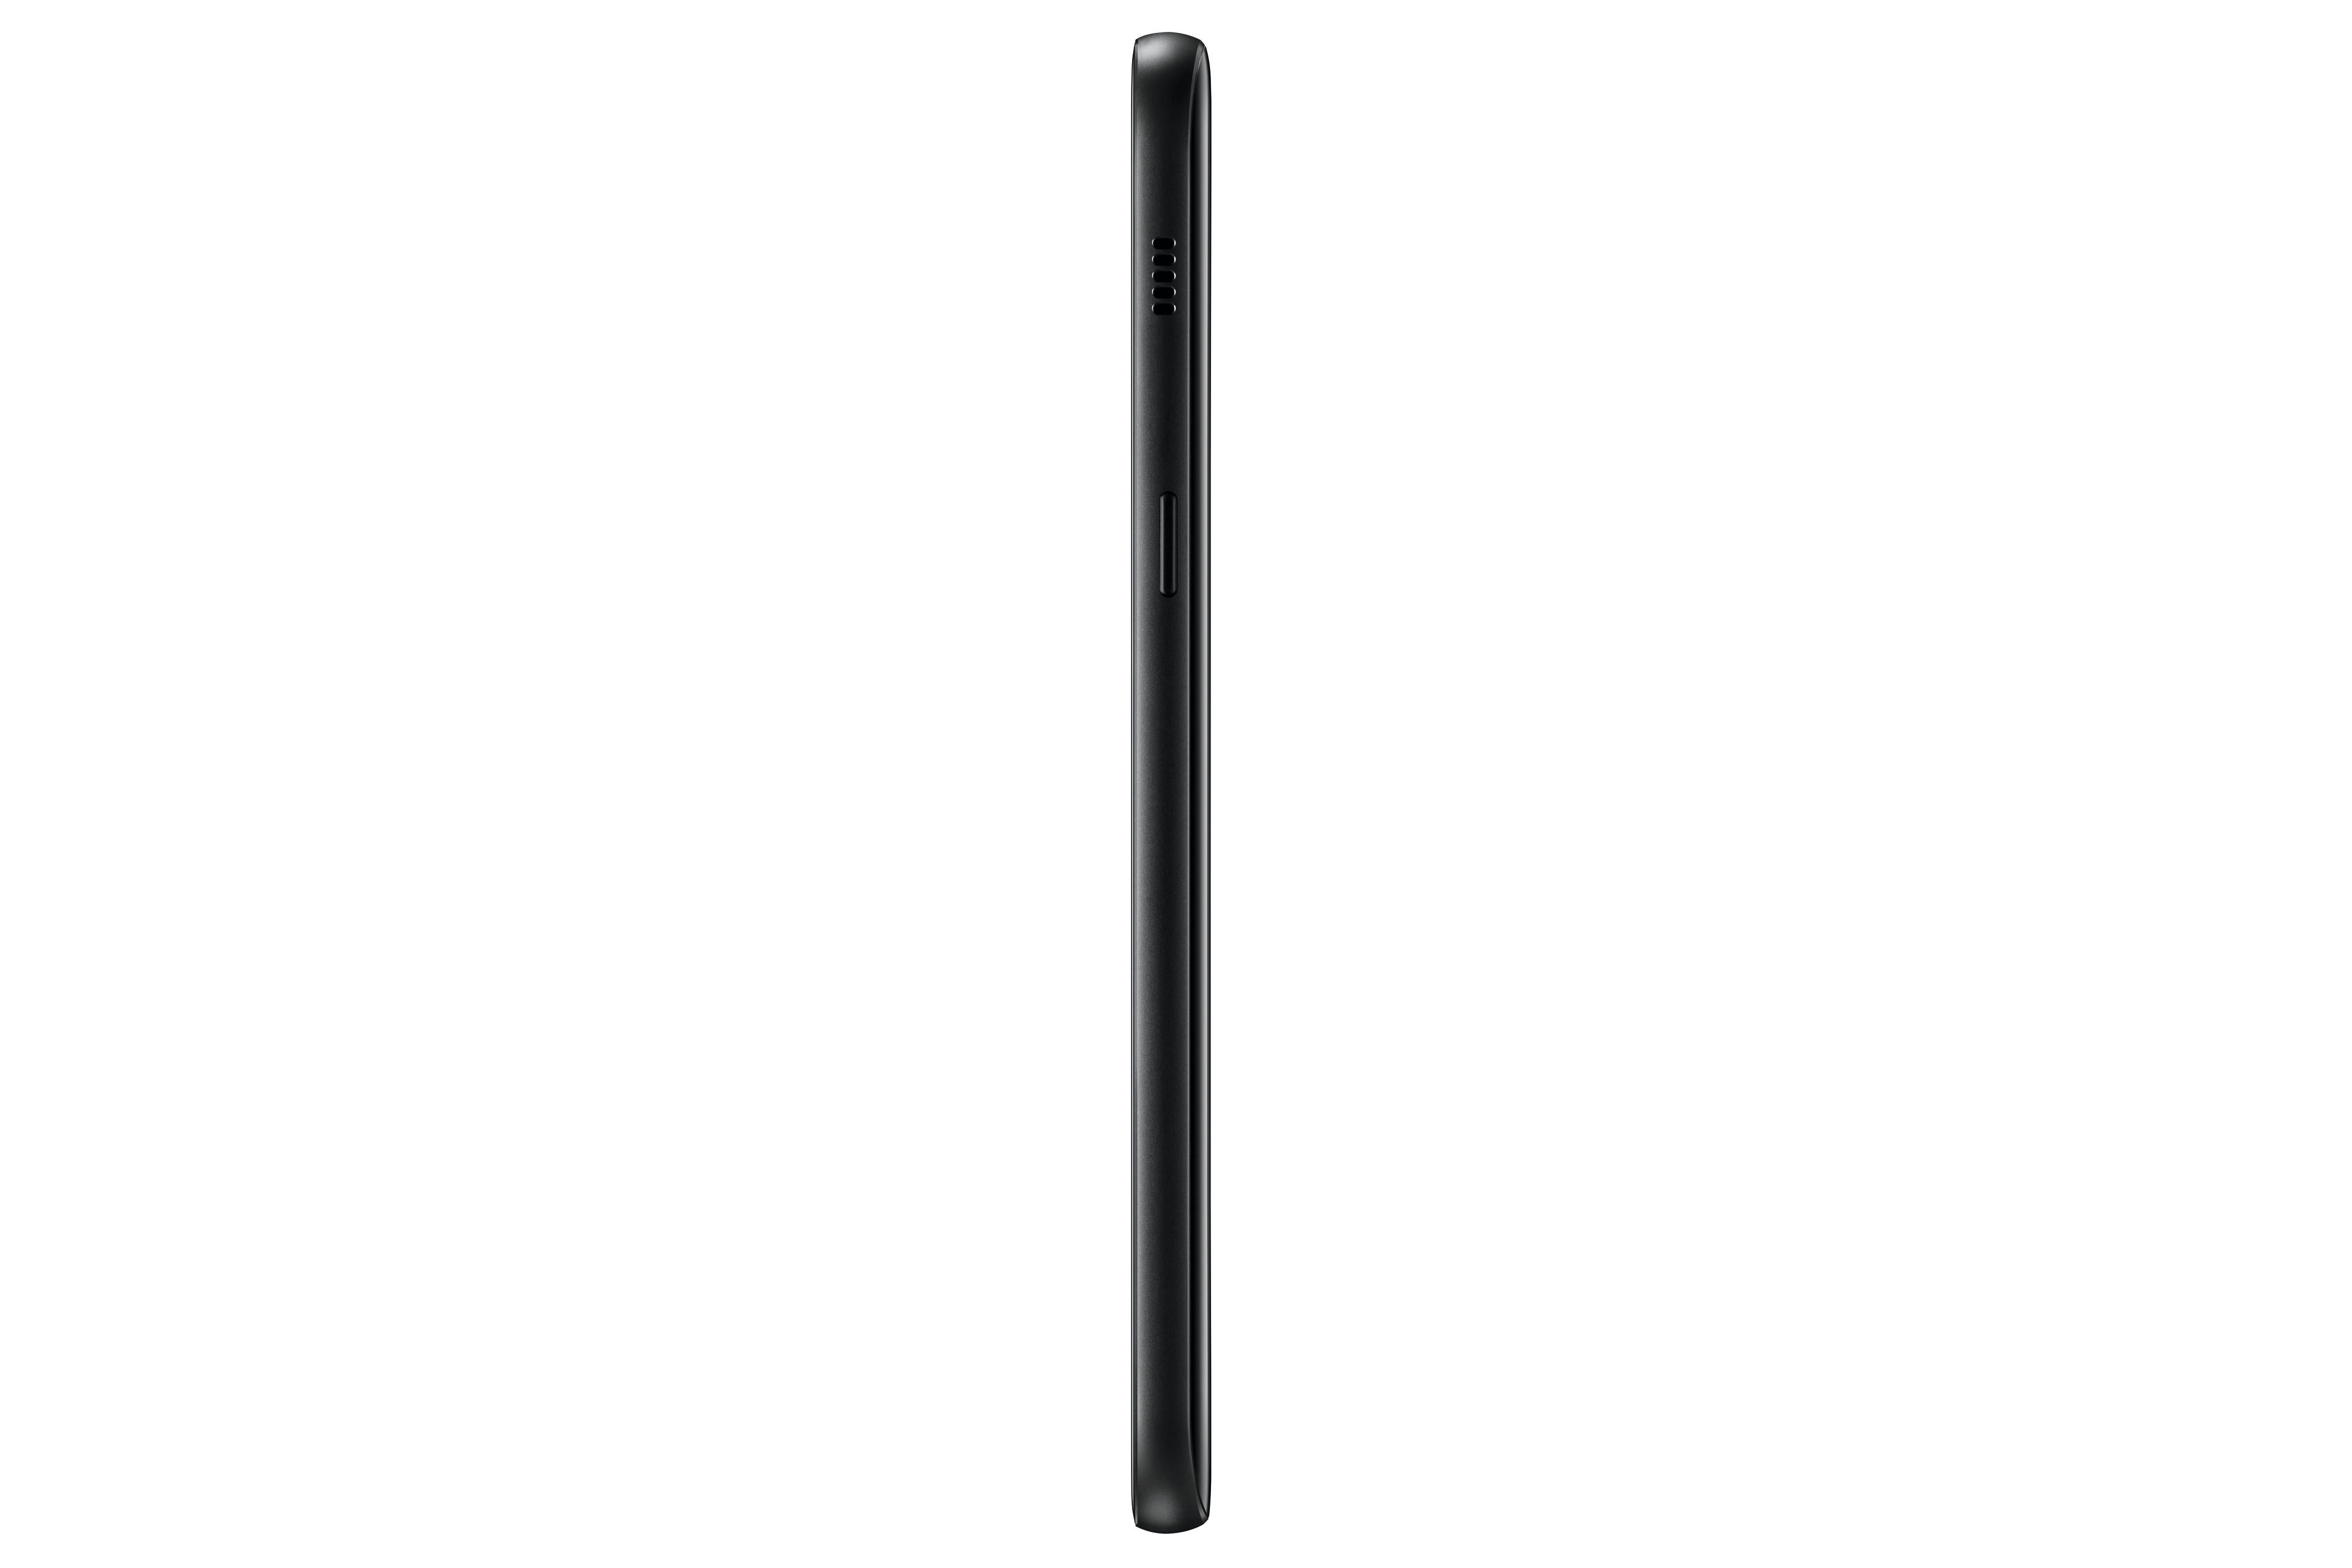 Black (*) A5 Sky Galaxy SAMSUNG B-WARE Smartphone, (2017)